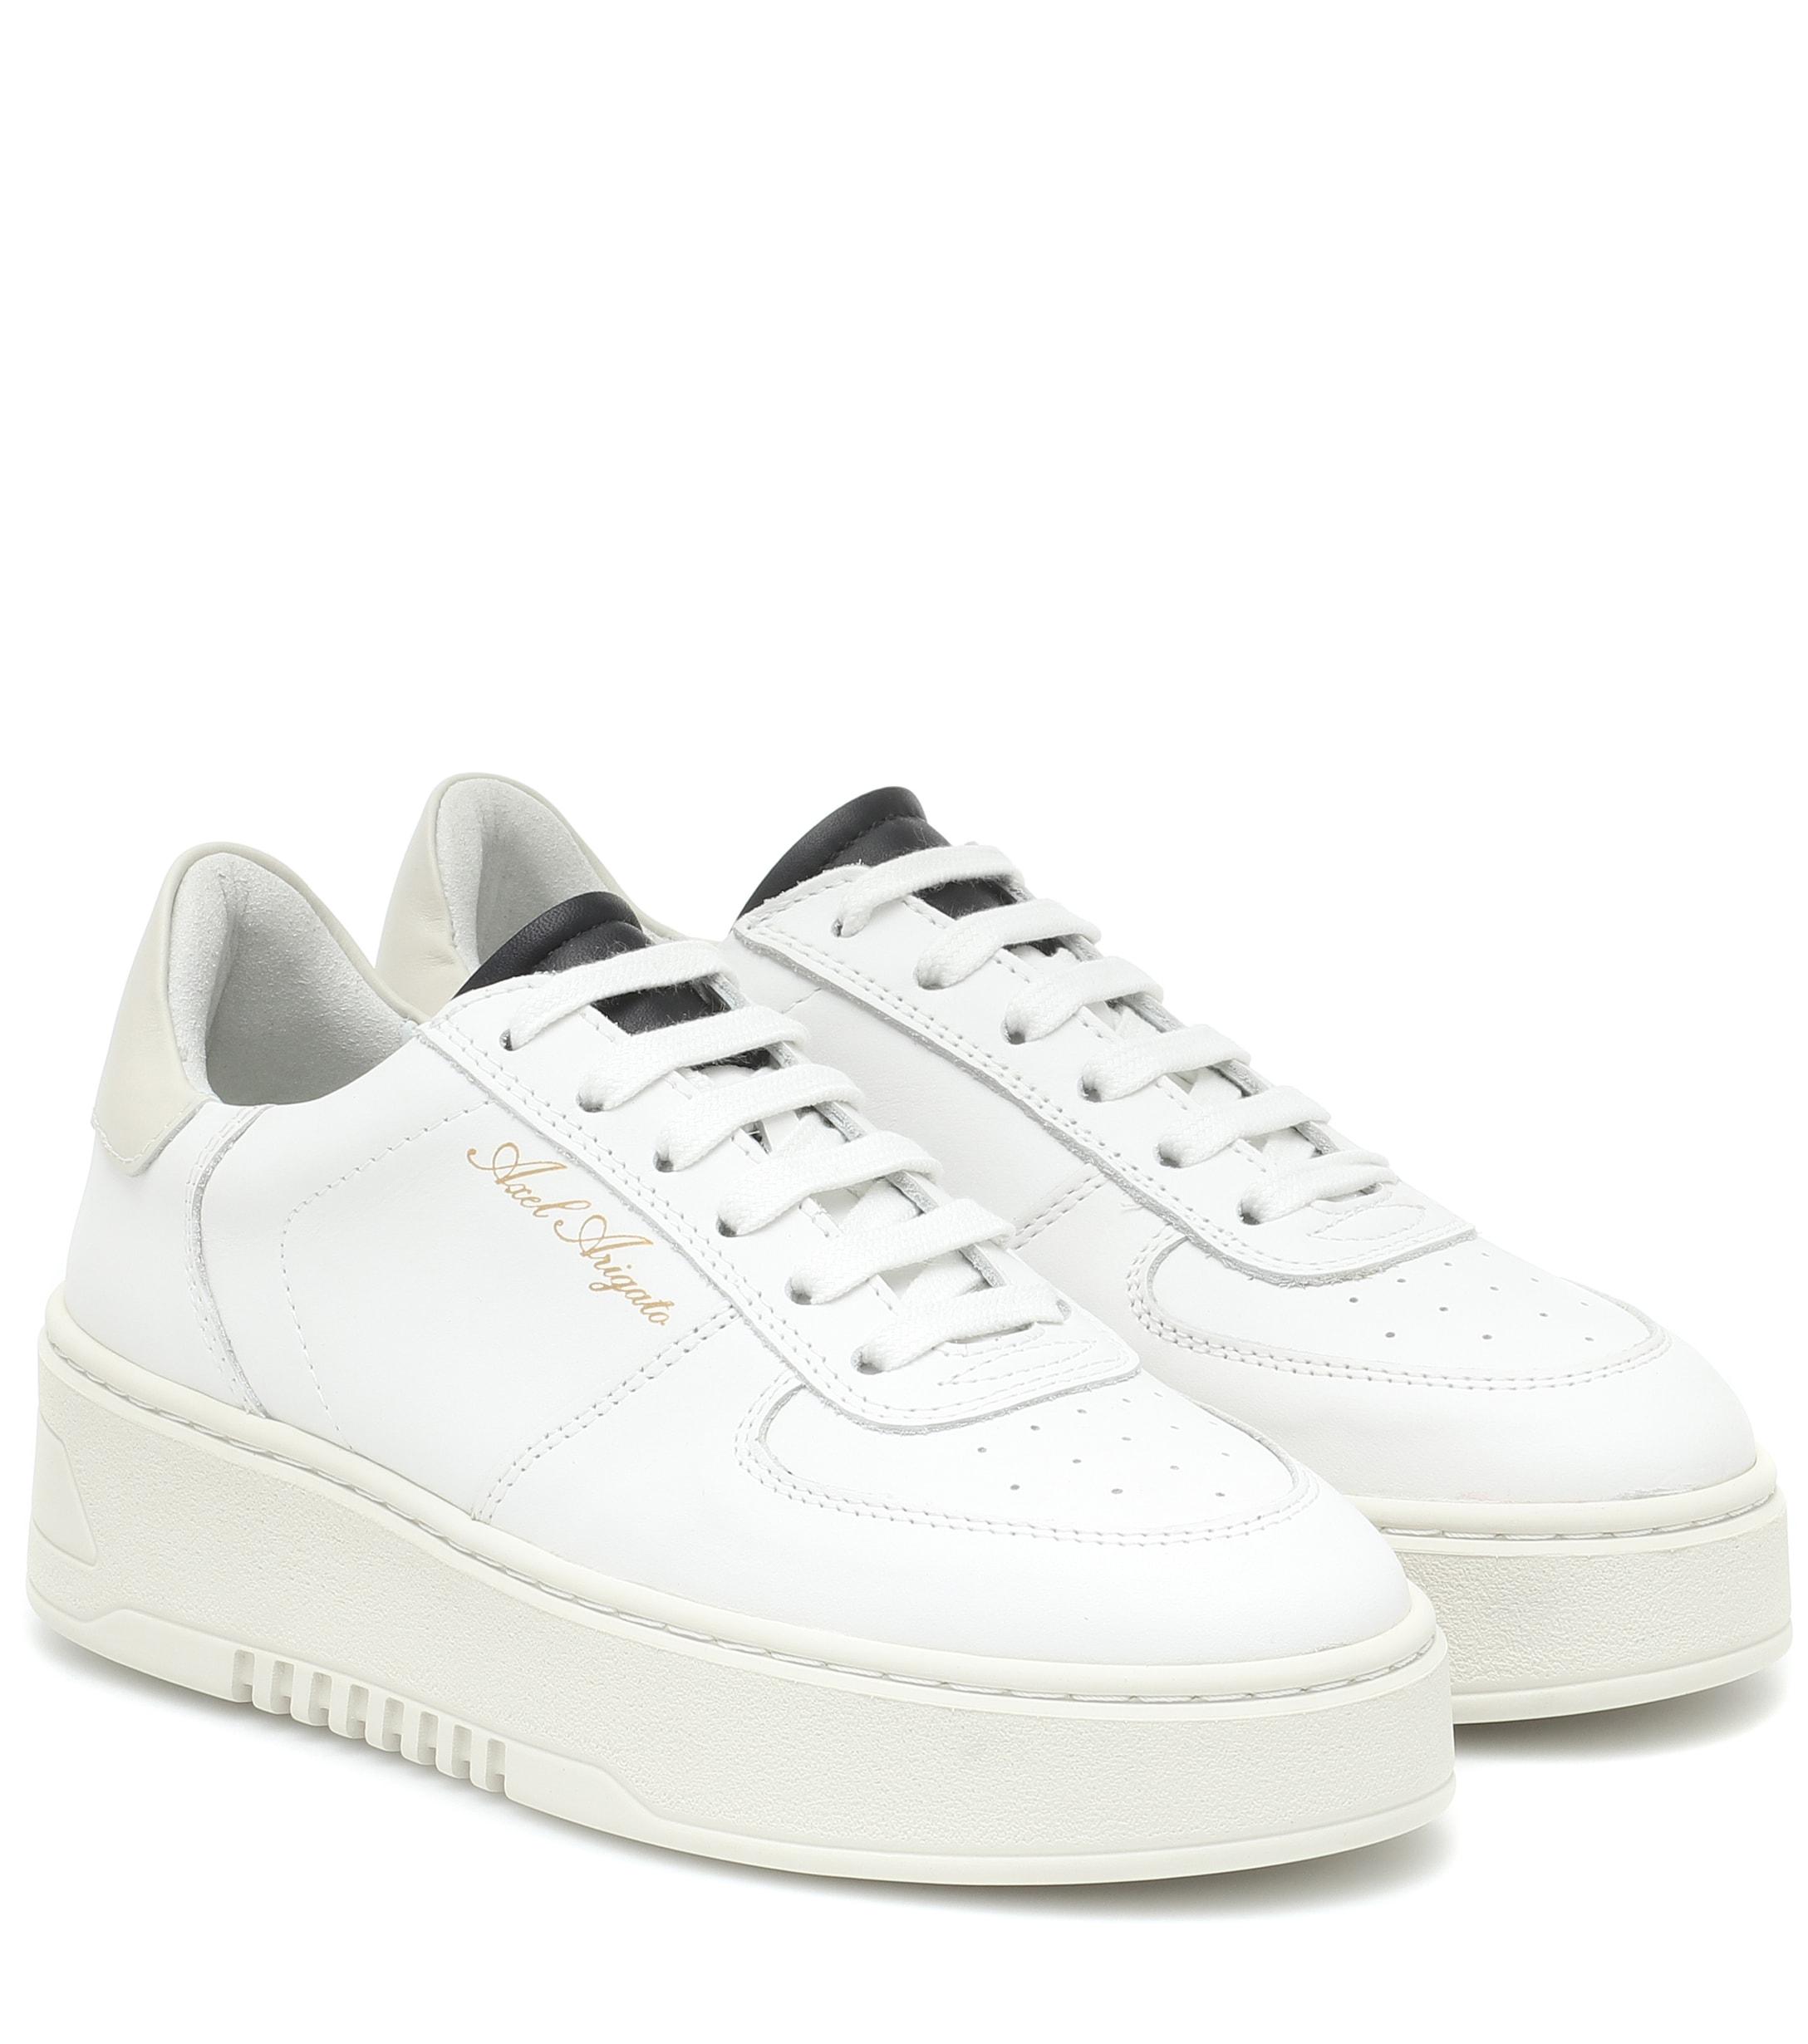 Axel Arigato Orbit Leather Sneakers in White | Lyst